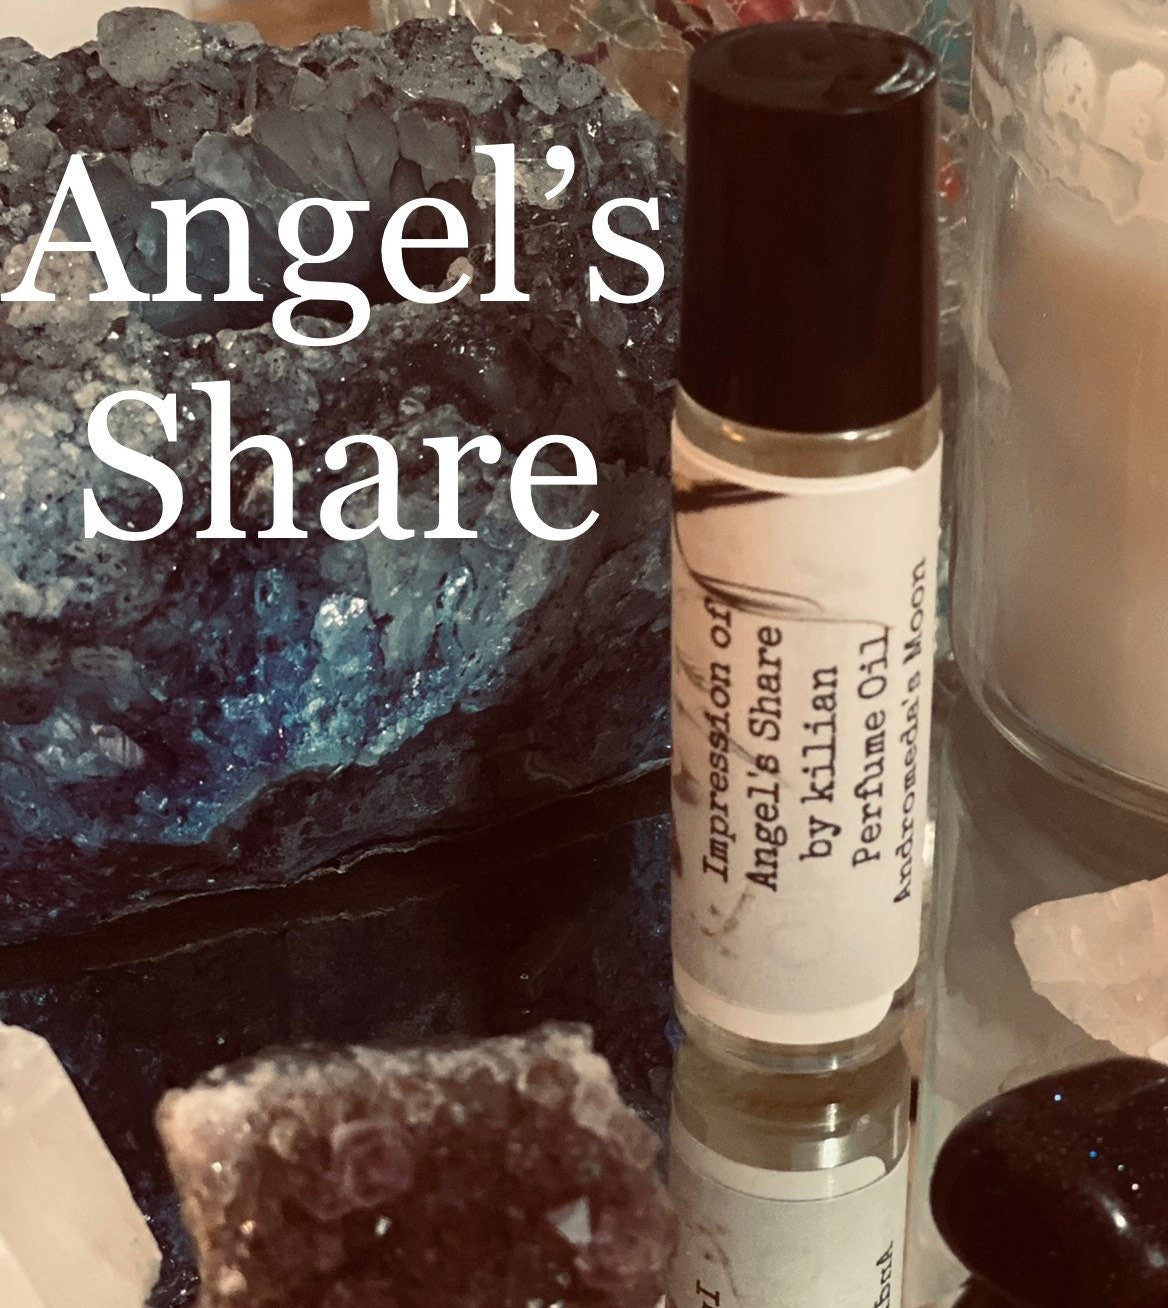 Inspired by Angels’ Share Eau de Parfum